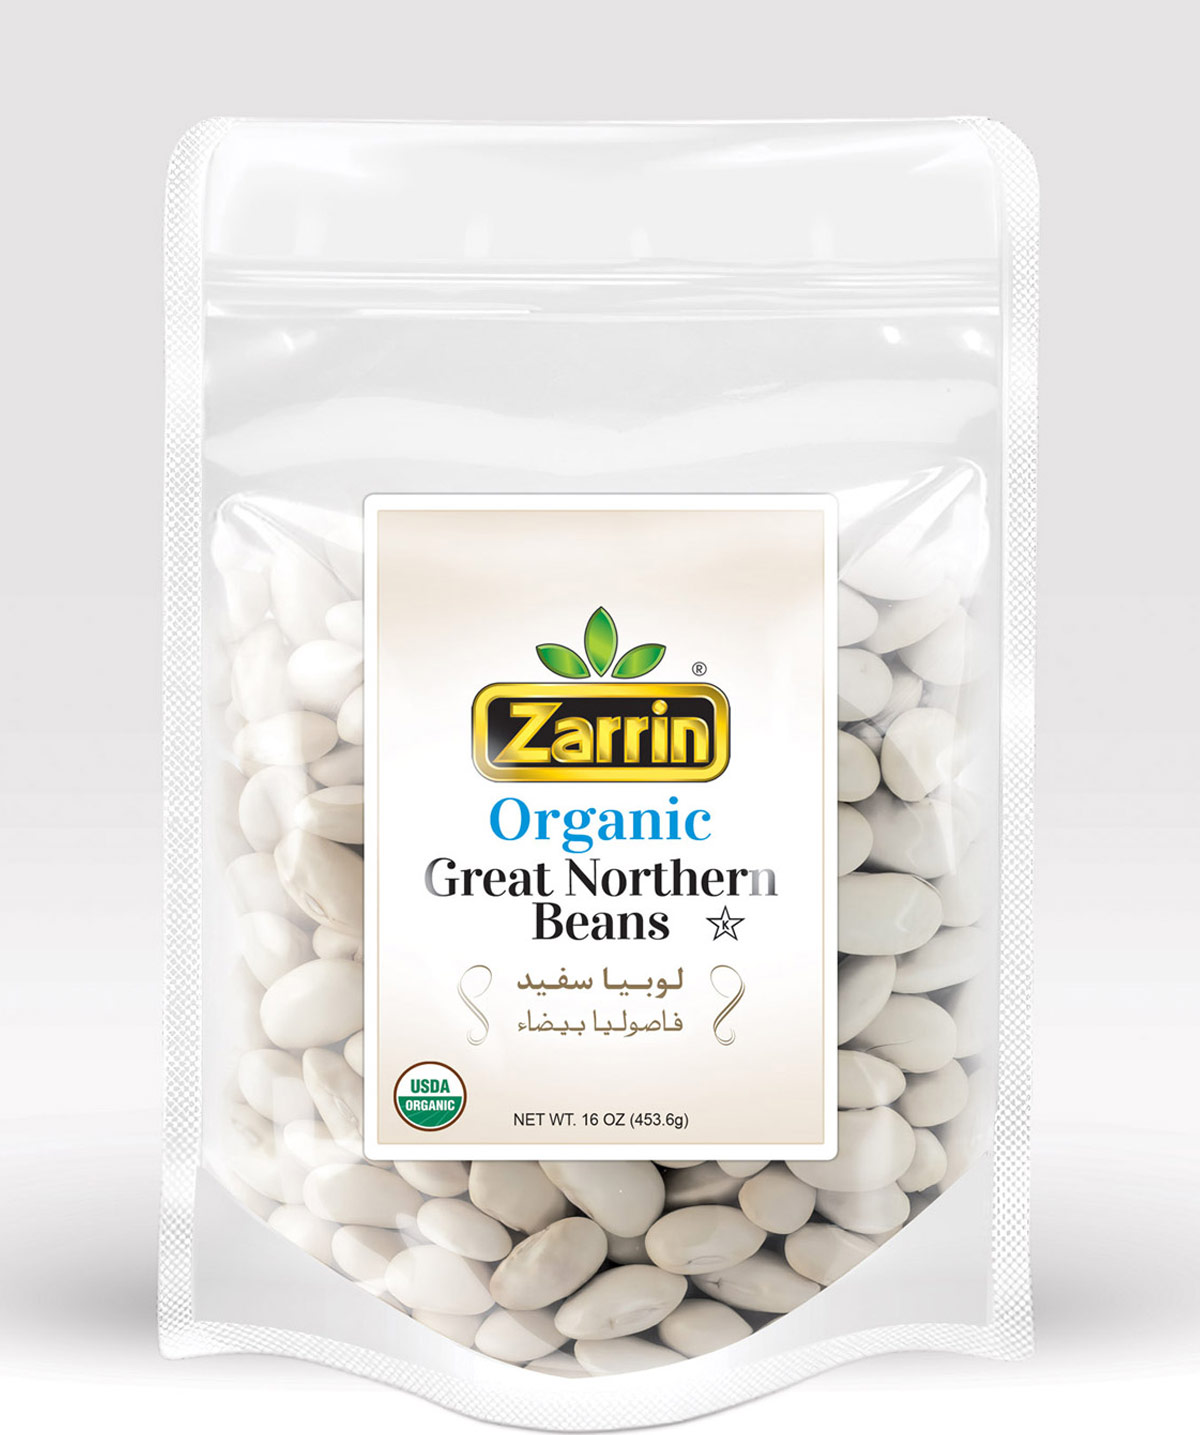 Zarrin Organic Great Northern Beans